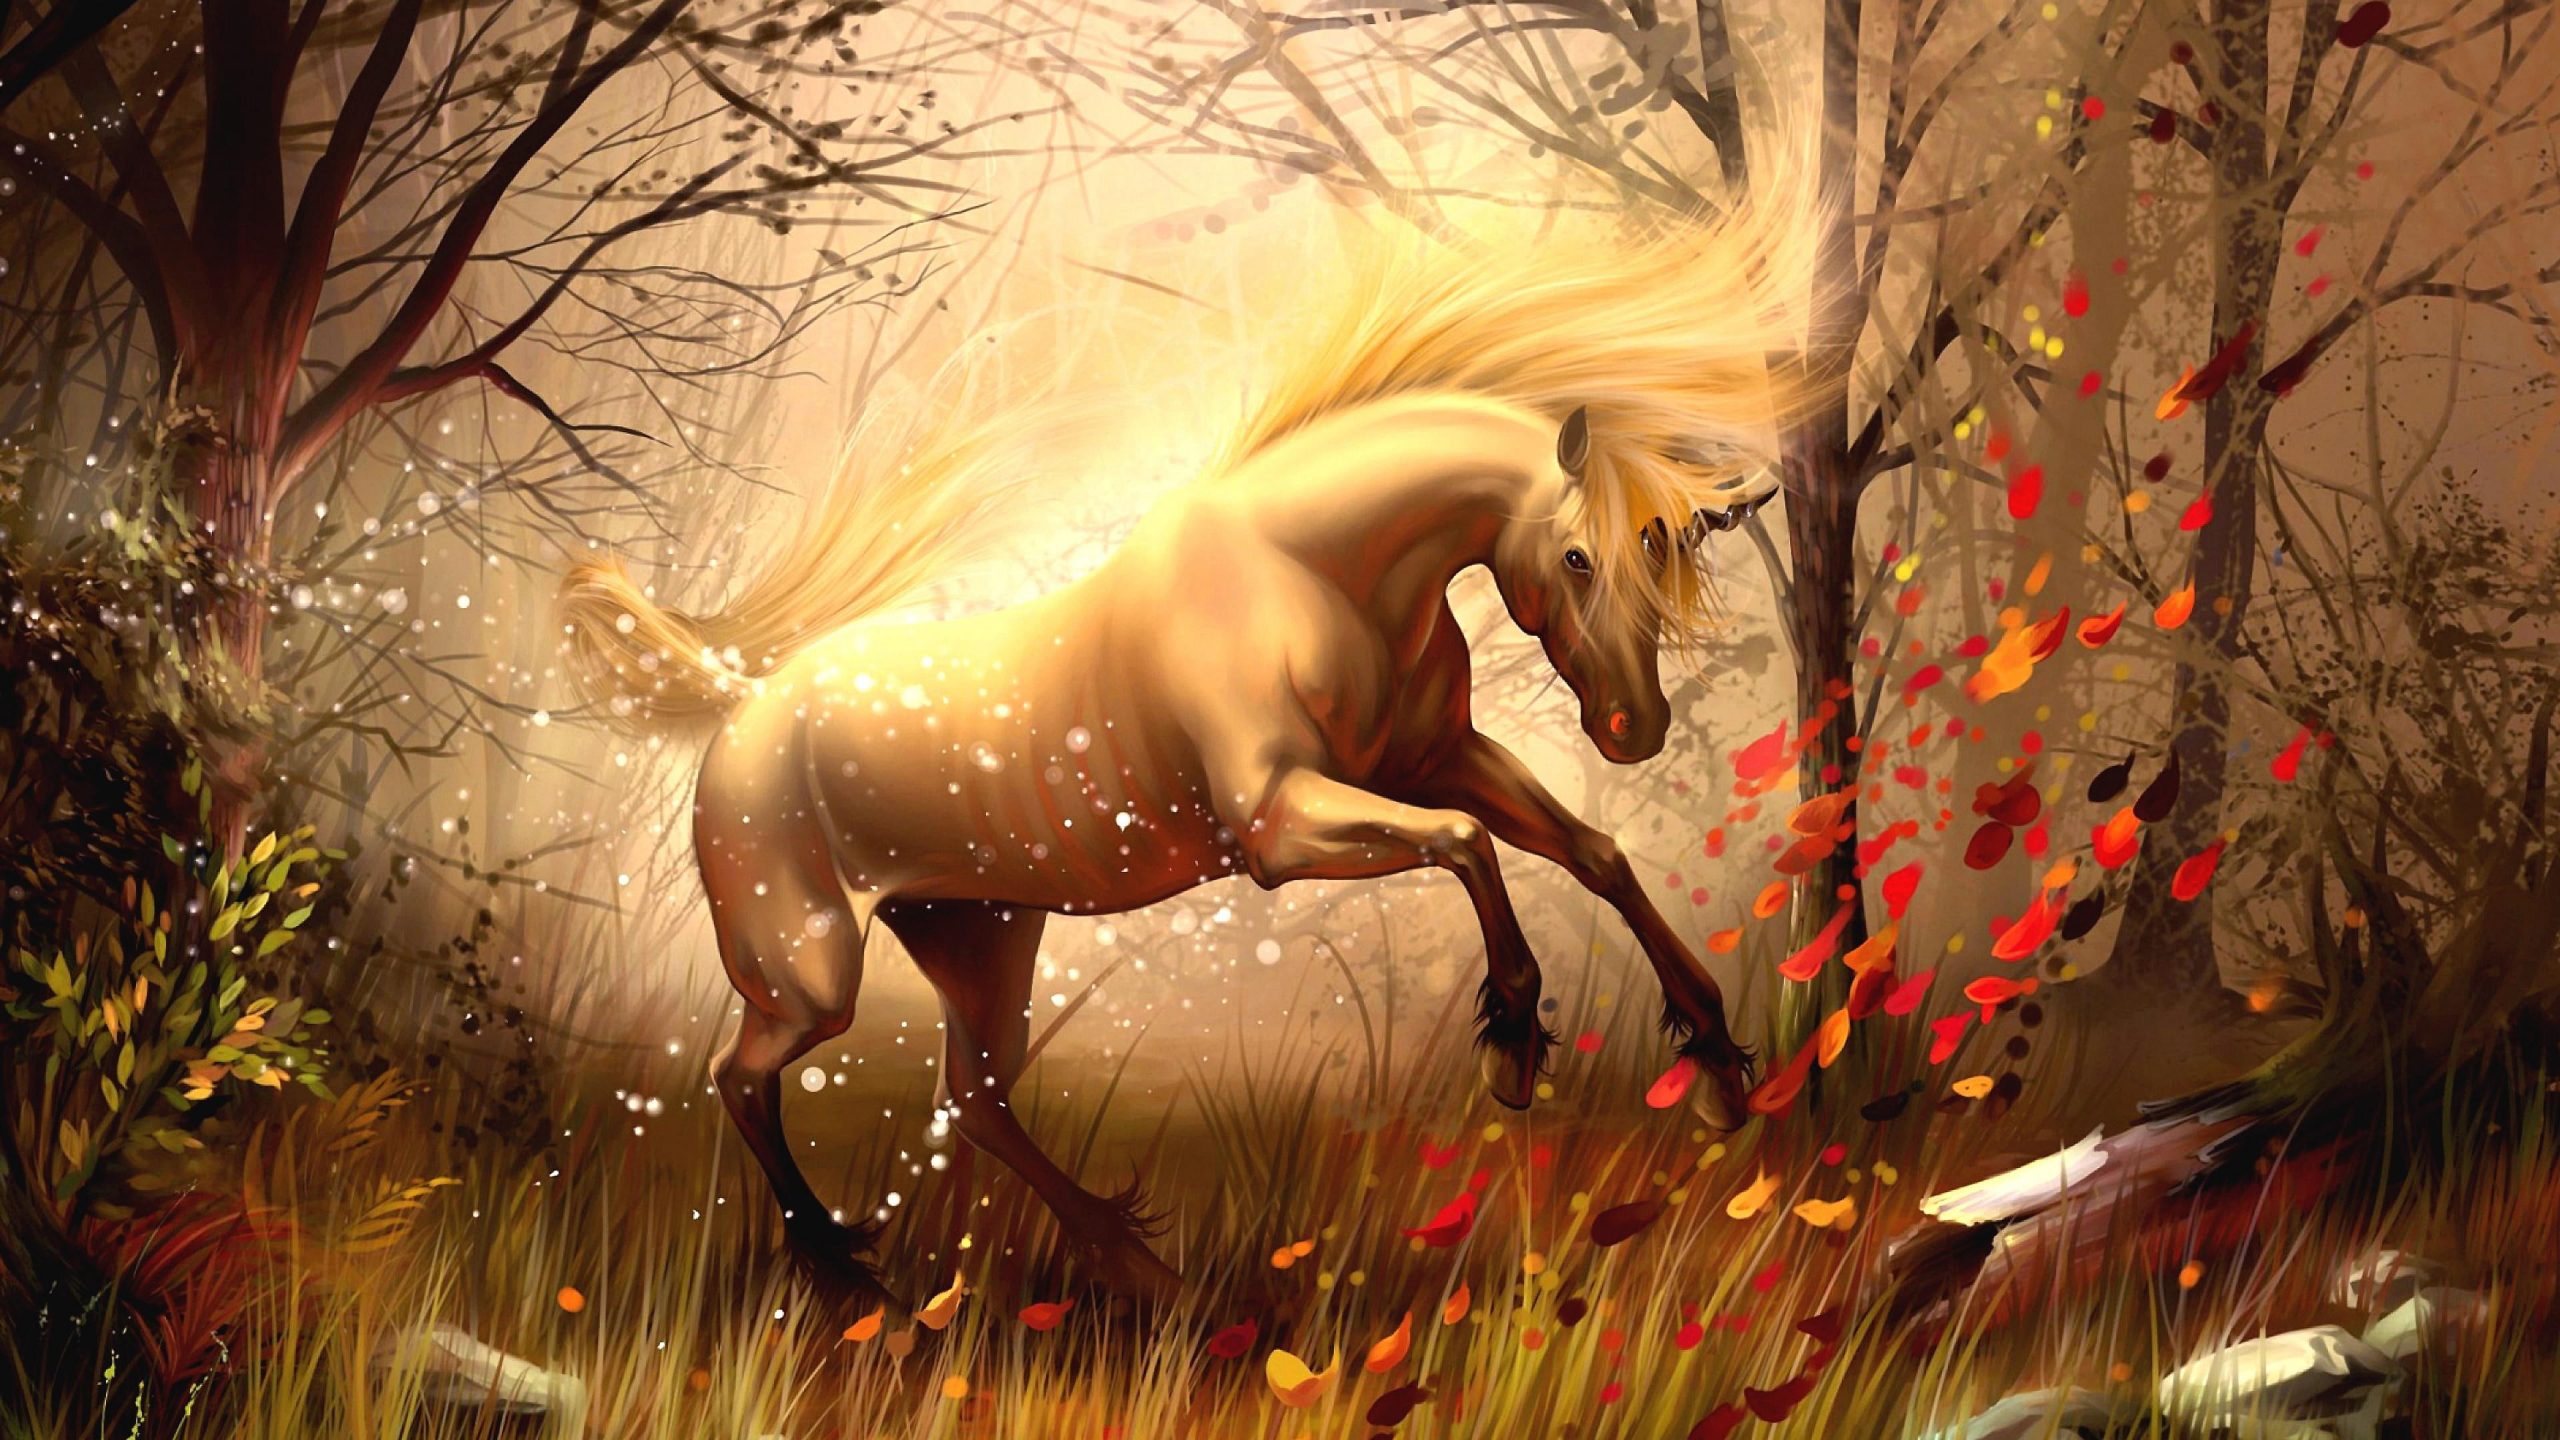 Nature, horse, unicorn wallpaper, tree, fantasy art, artwork, mythology